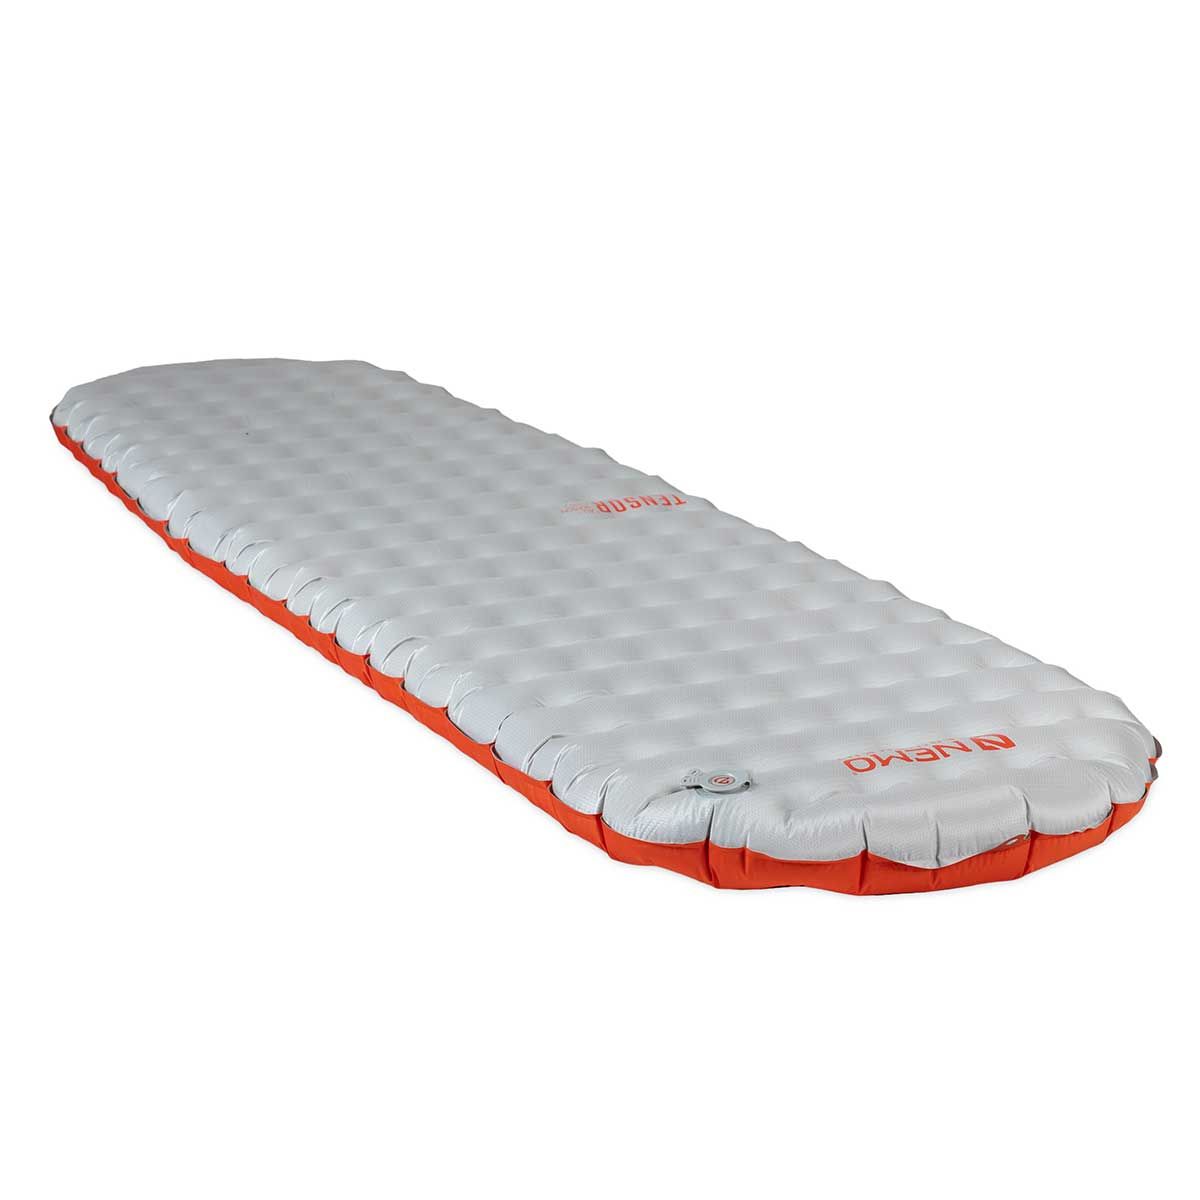 Insulated Nemo Tensor sleeping pad